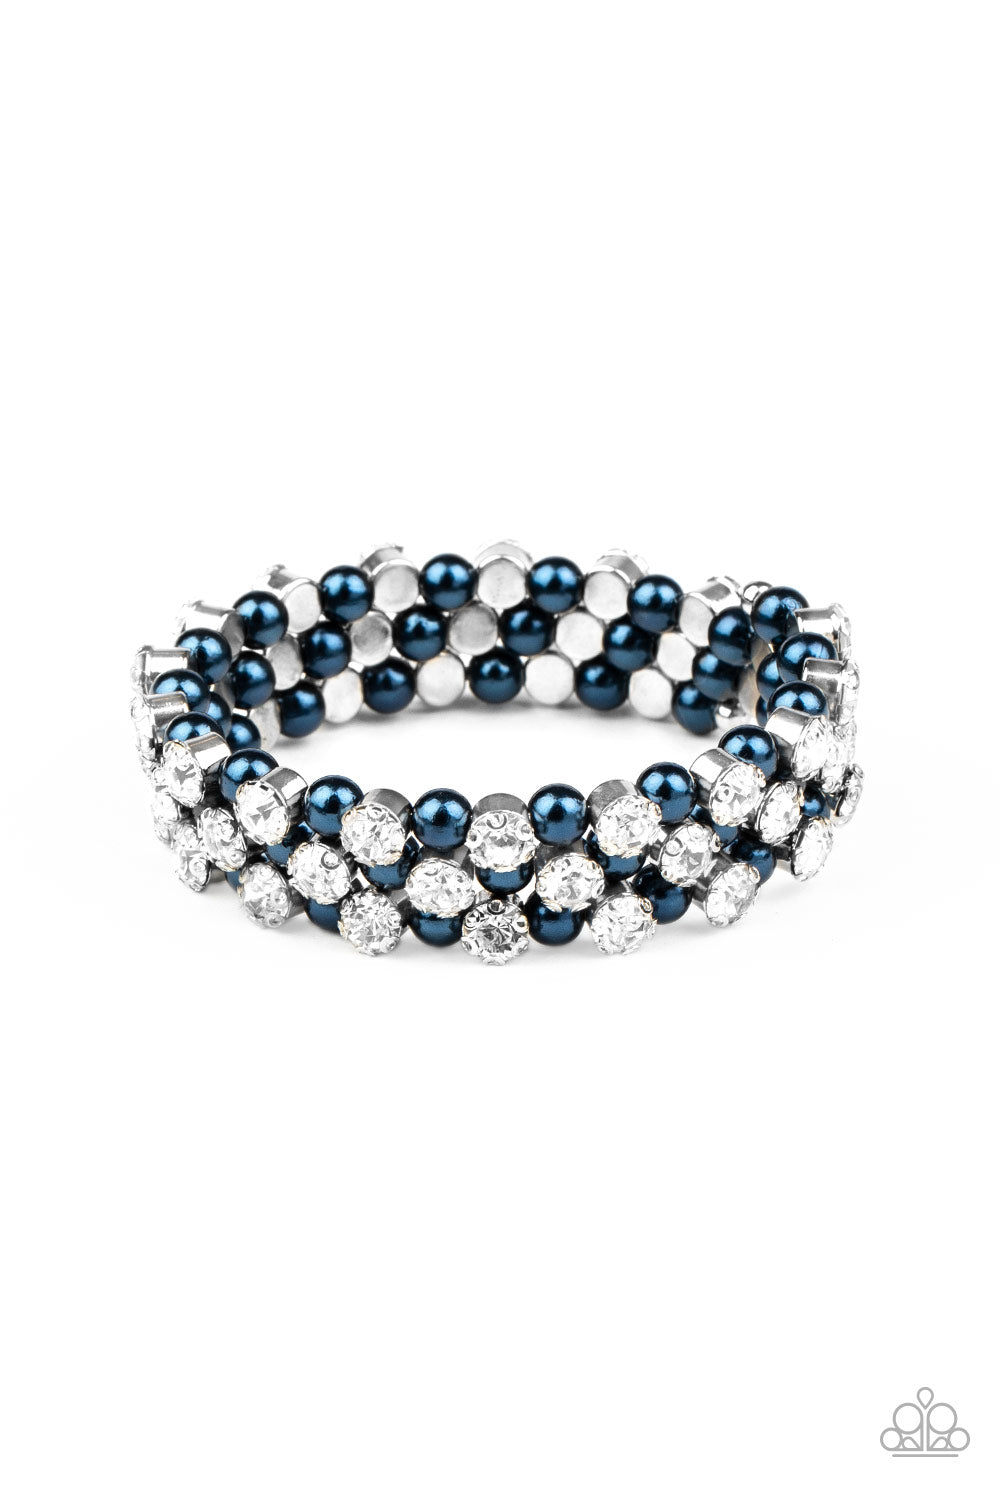 Paparazzi Metro Motif - Blue Pearl Bracelet - A Finishing Touch 